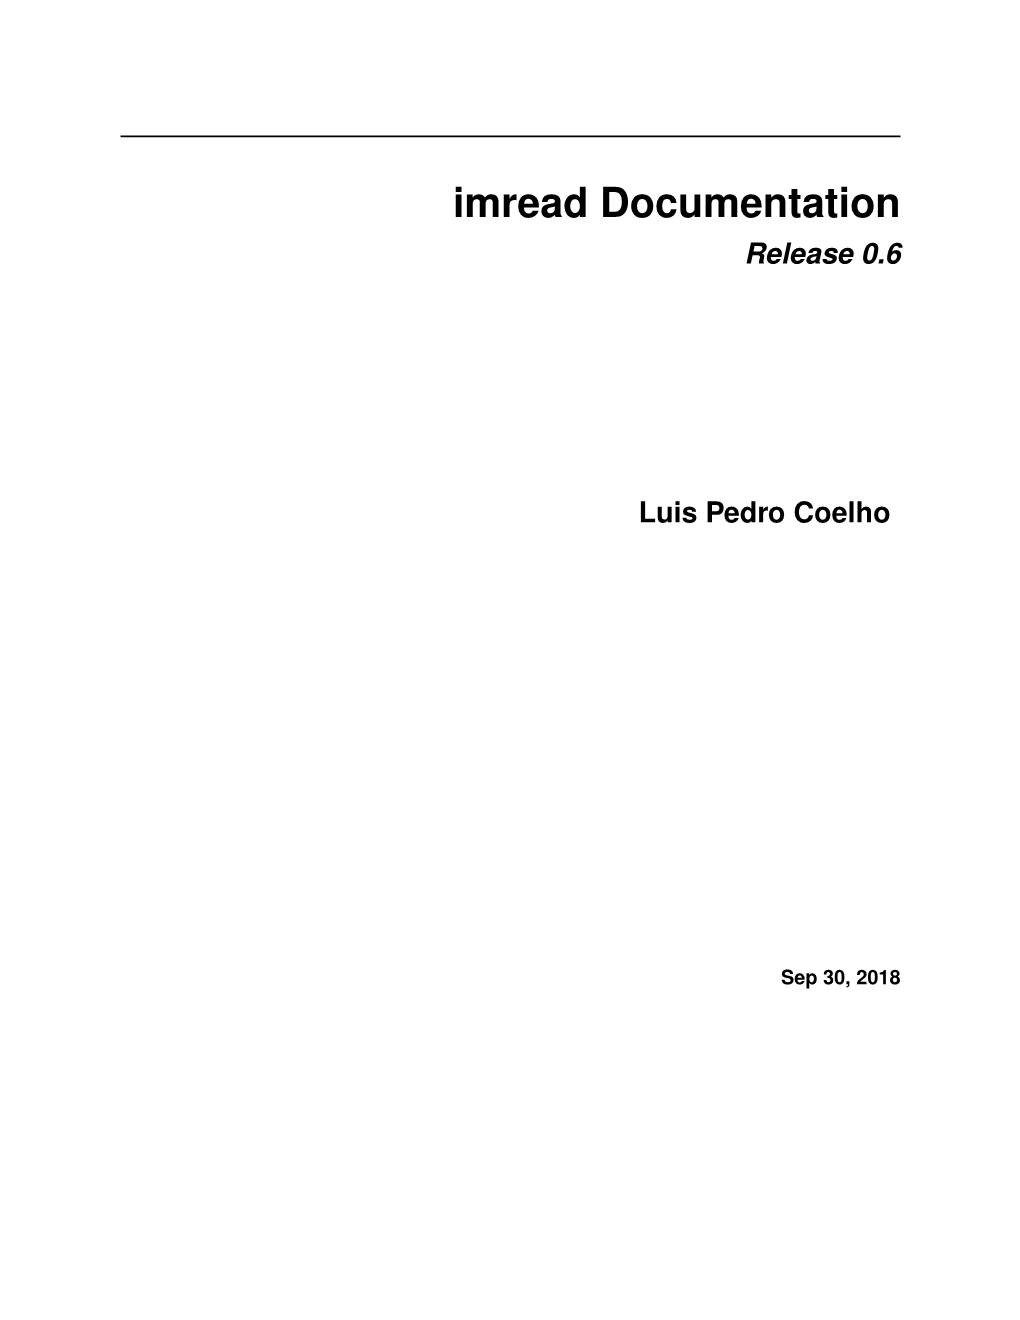 Imread Documentation Release 0.6